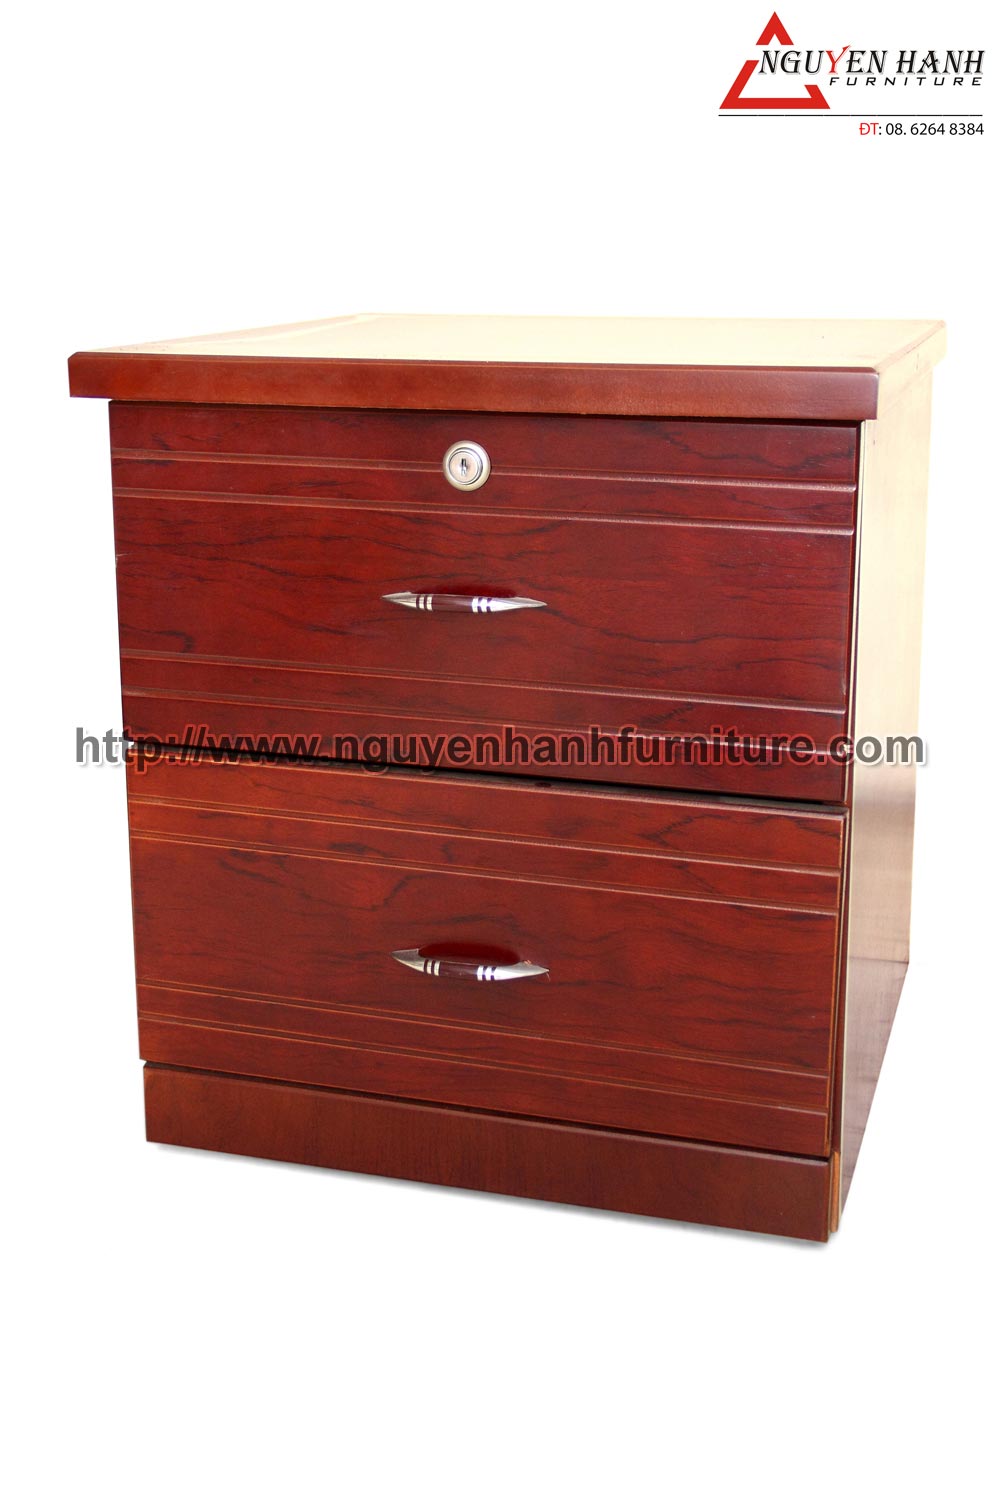 Name product: Headboard Cabinet of Veneer Rosewood- Dimensions: 44 x 44 x 48cm - Description: Veneer rosewood